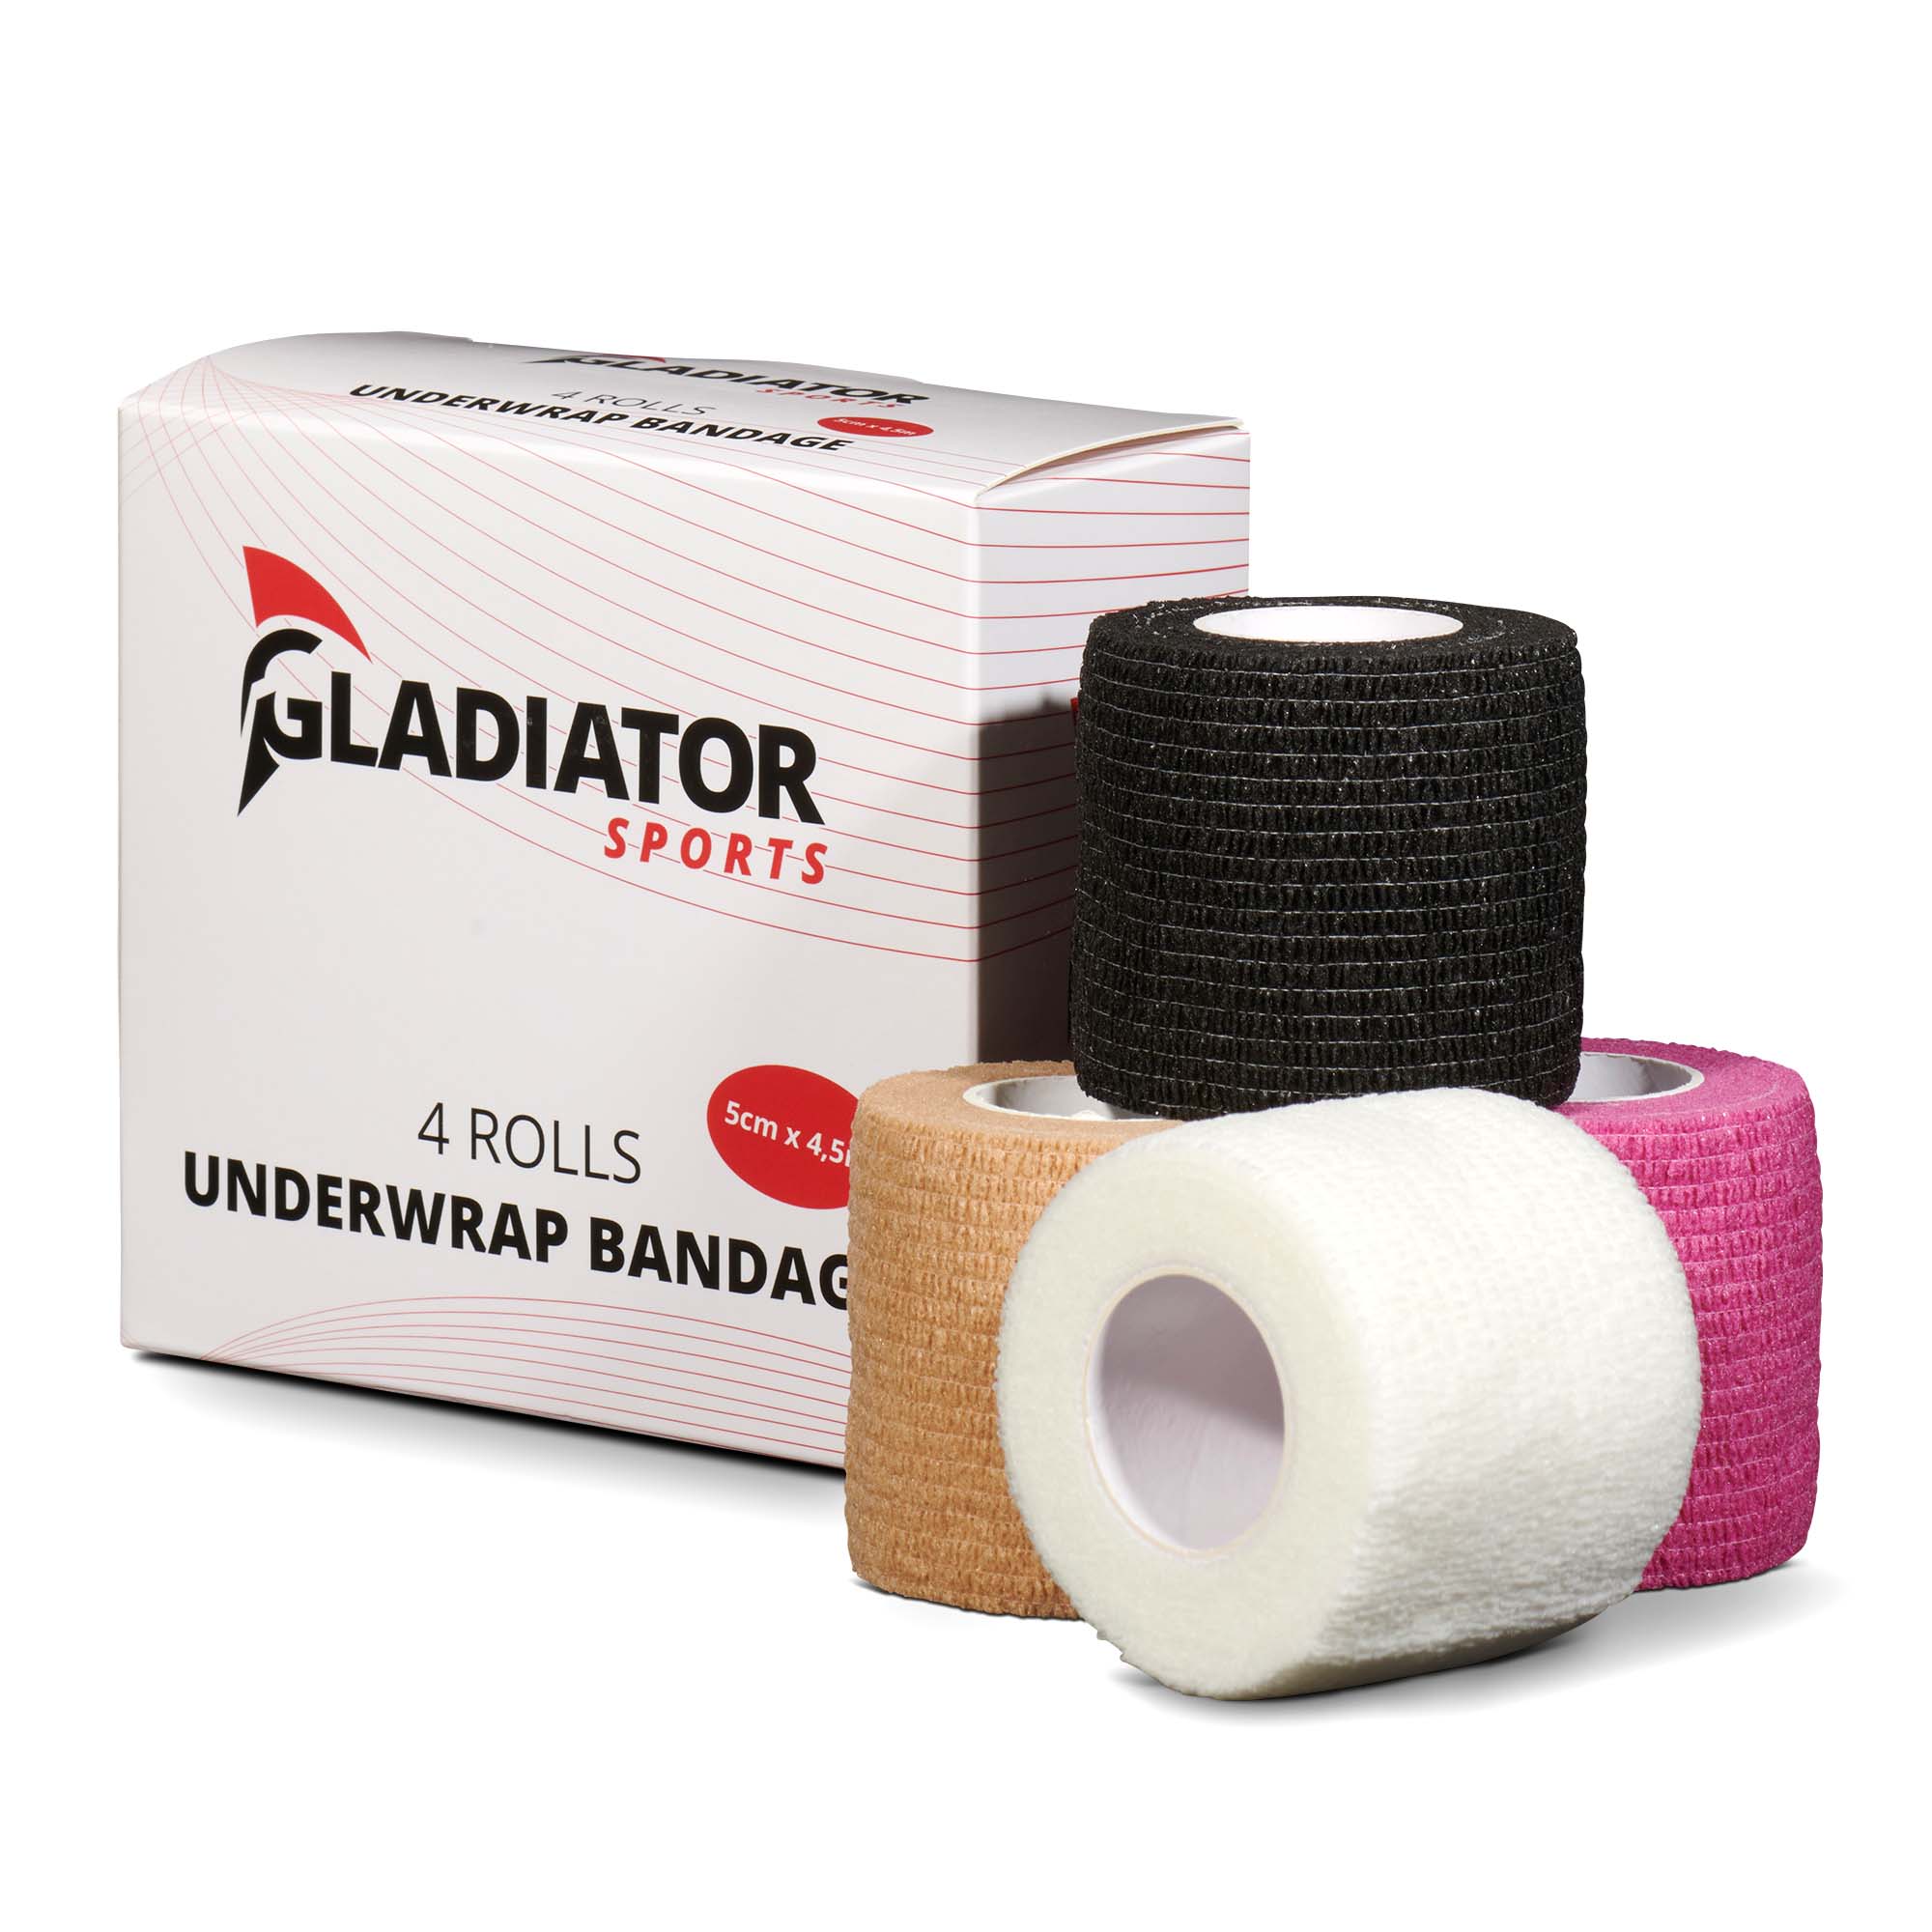 Gladiator Sports underwrap bandage 4 rolls with box